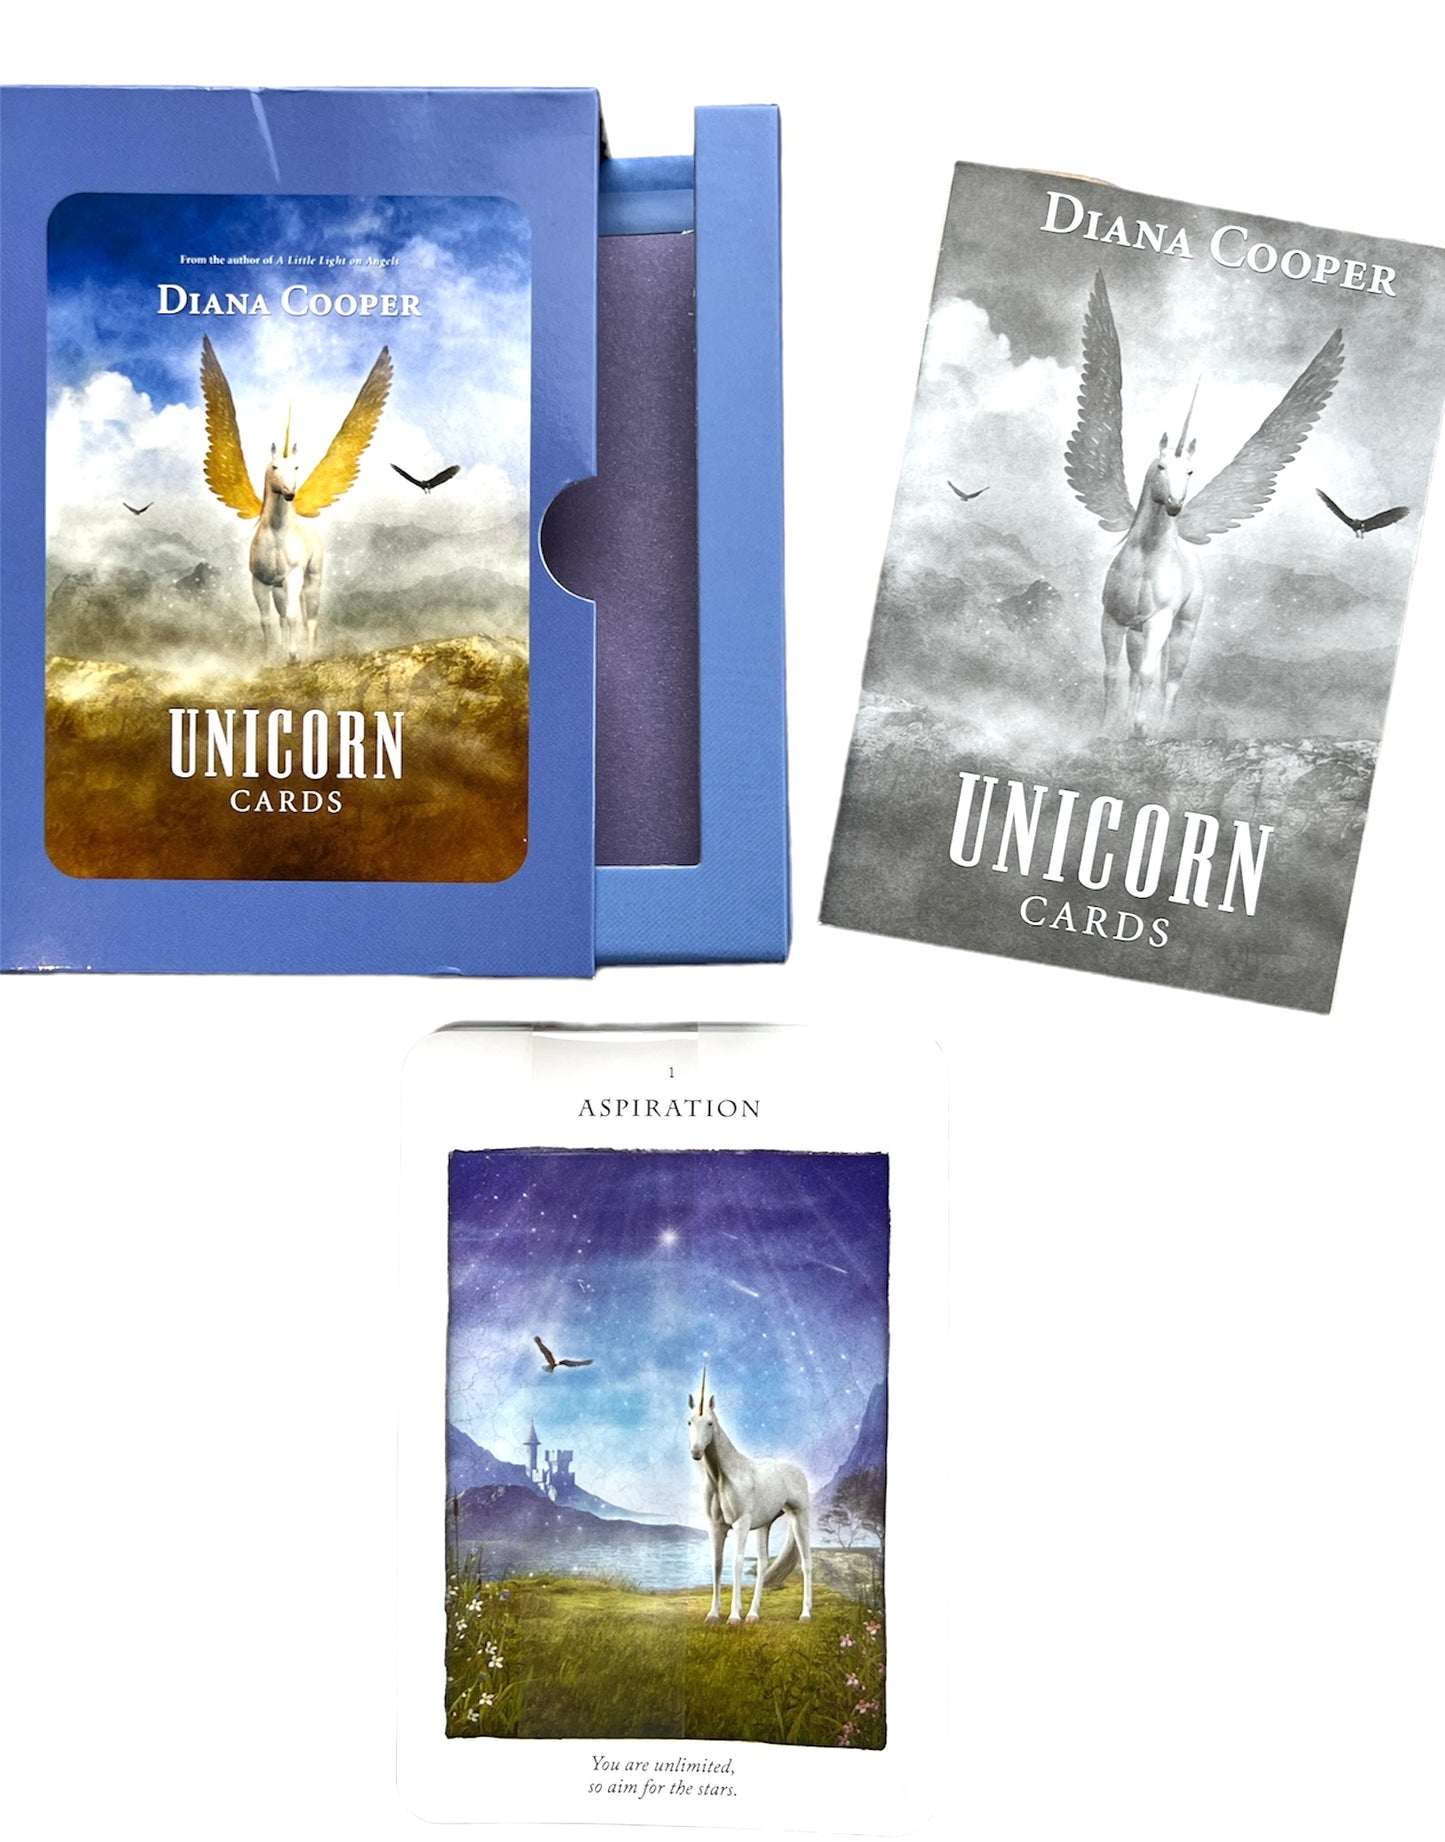 Unicorn Oracle Cards - Diana Cooper